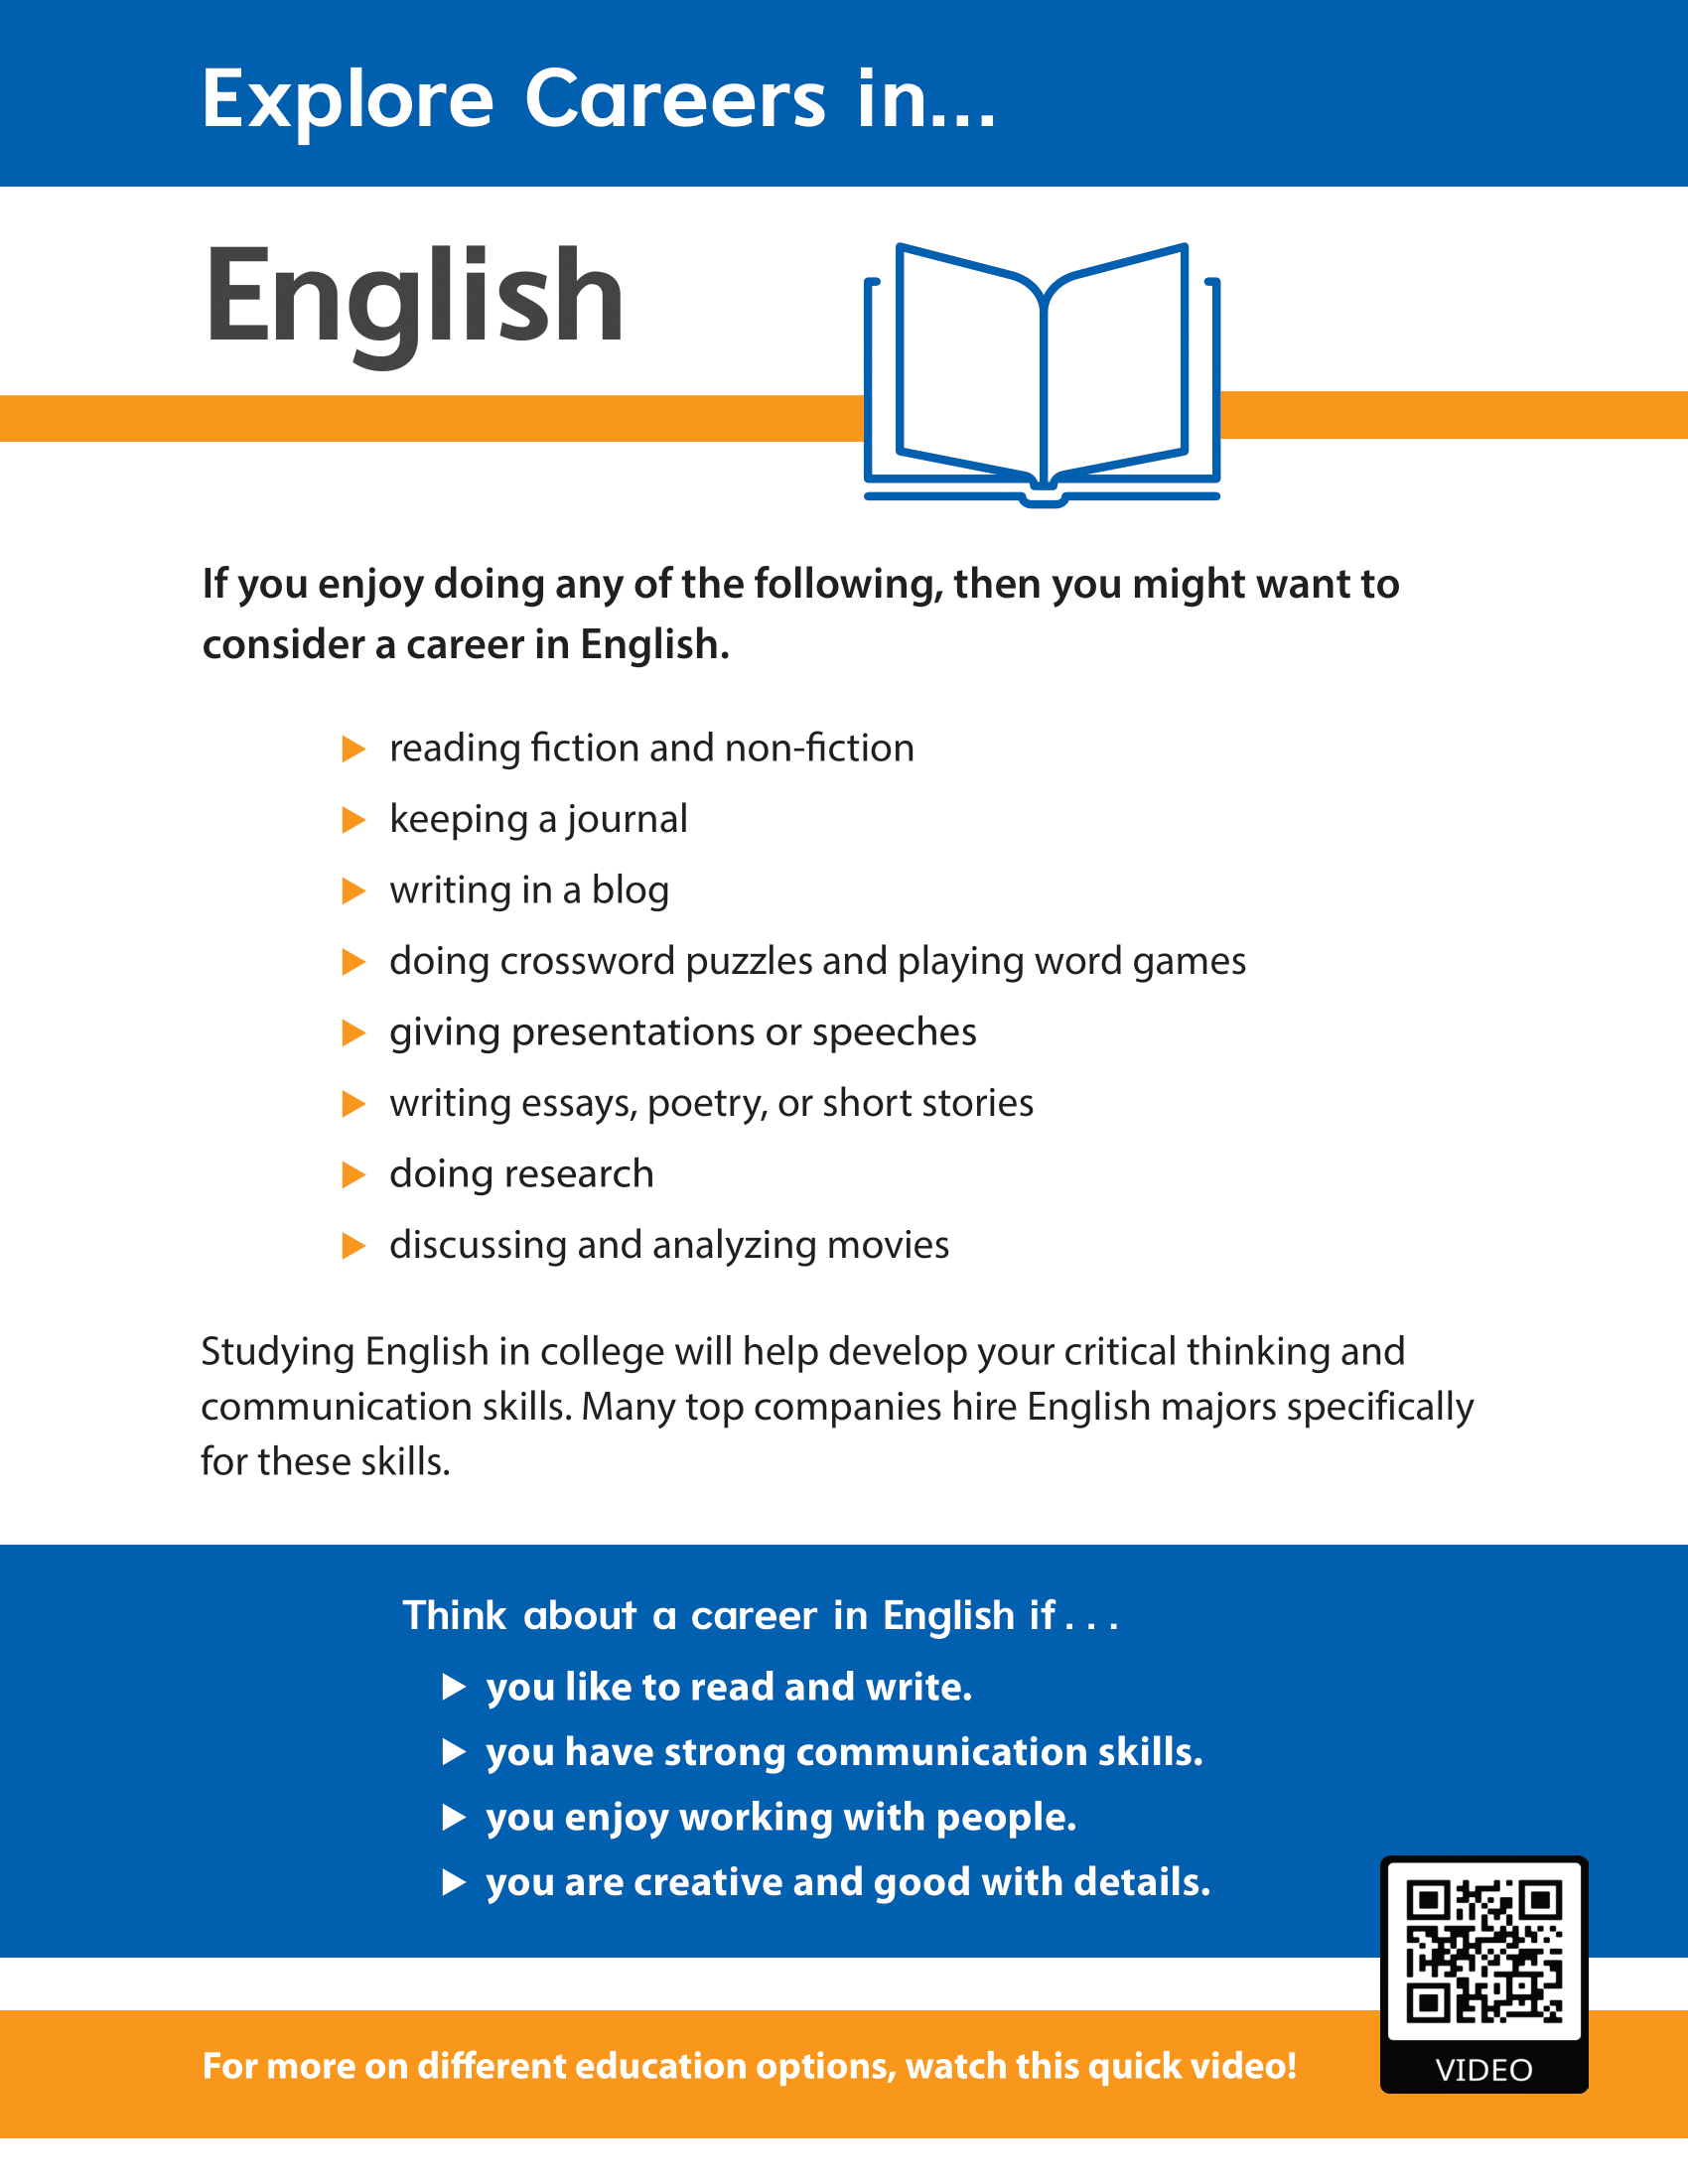 Explore Careers in English